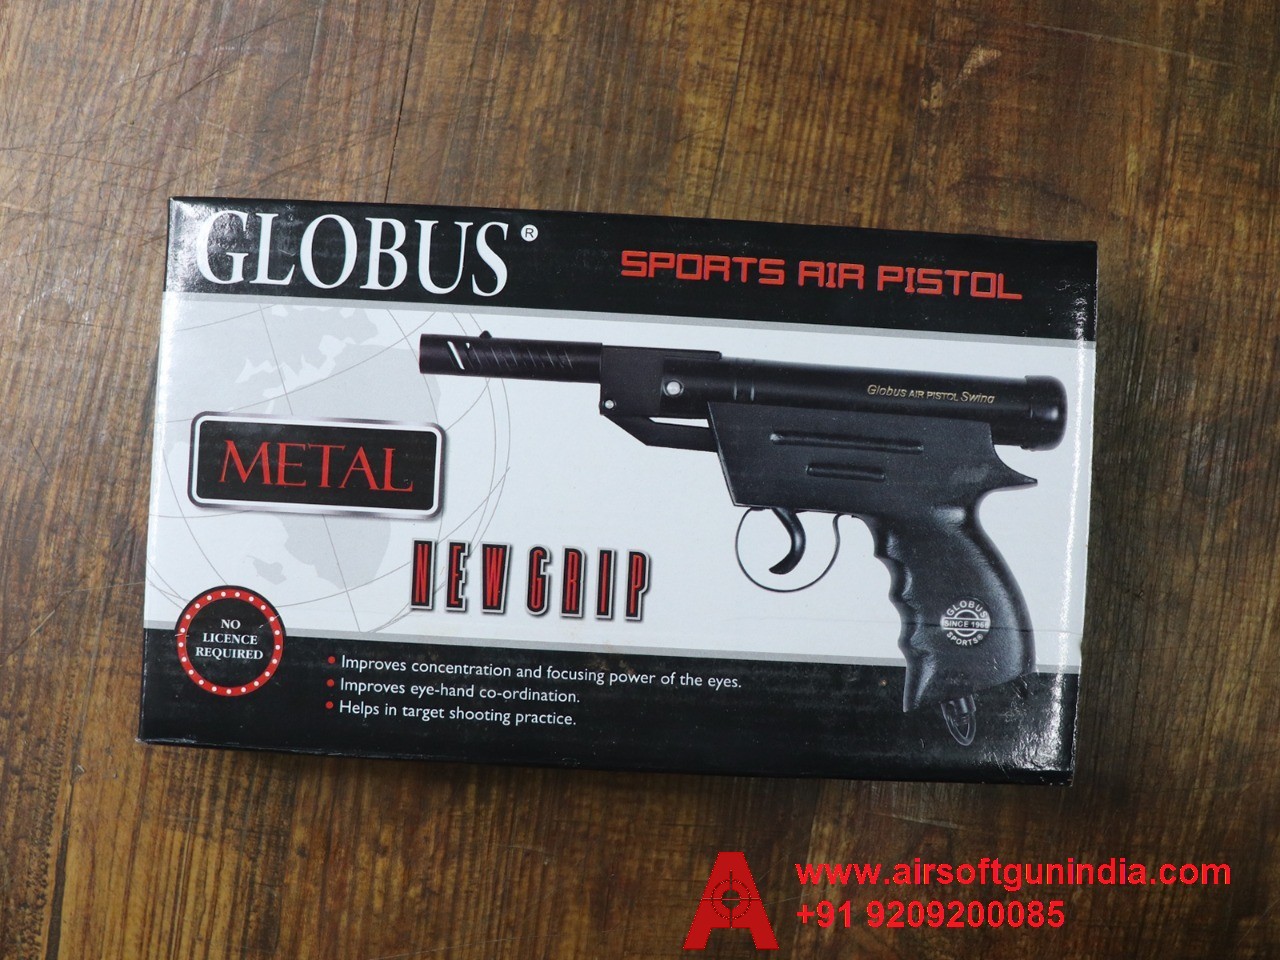 Globus Swing Black Sports .177 Air Pistol By Airsoft Gun India